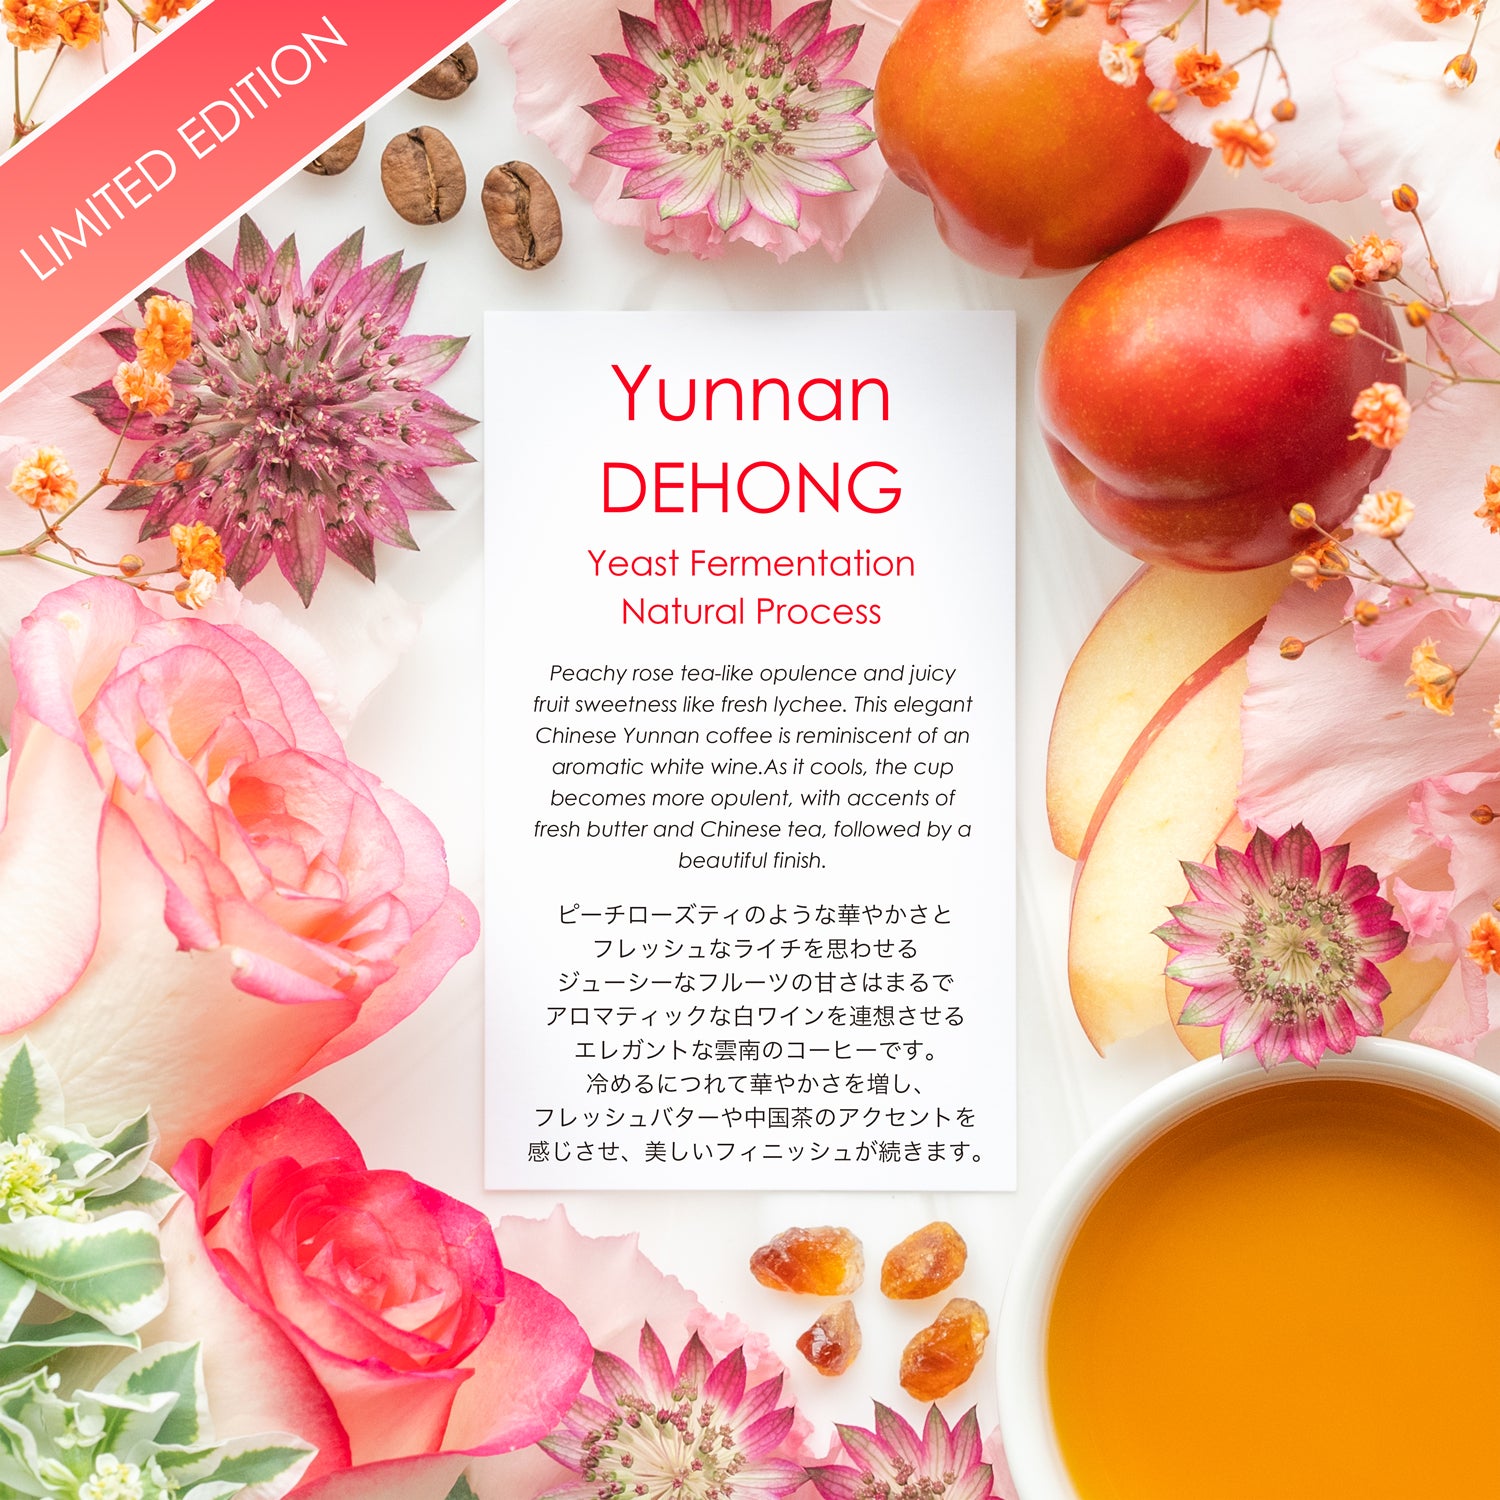 DEHONG Yeast Fermentation Natural Process [Peachy rose tea-like]